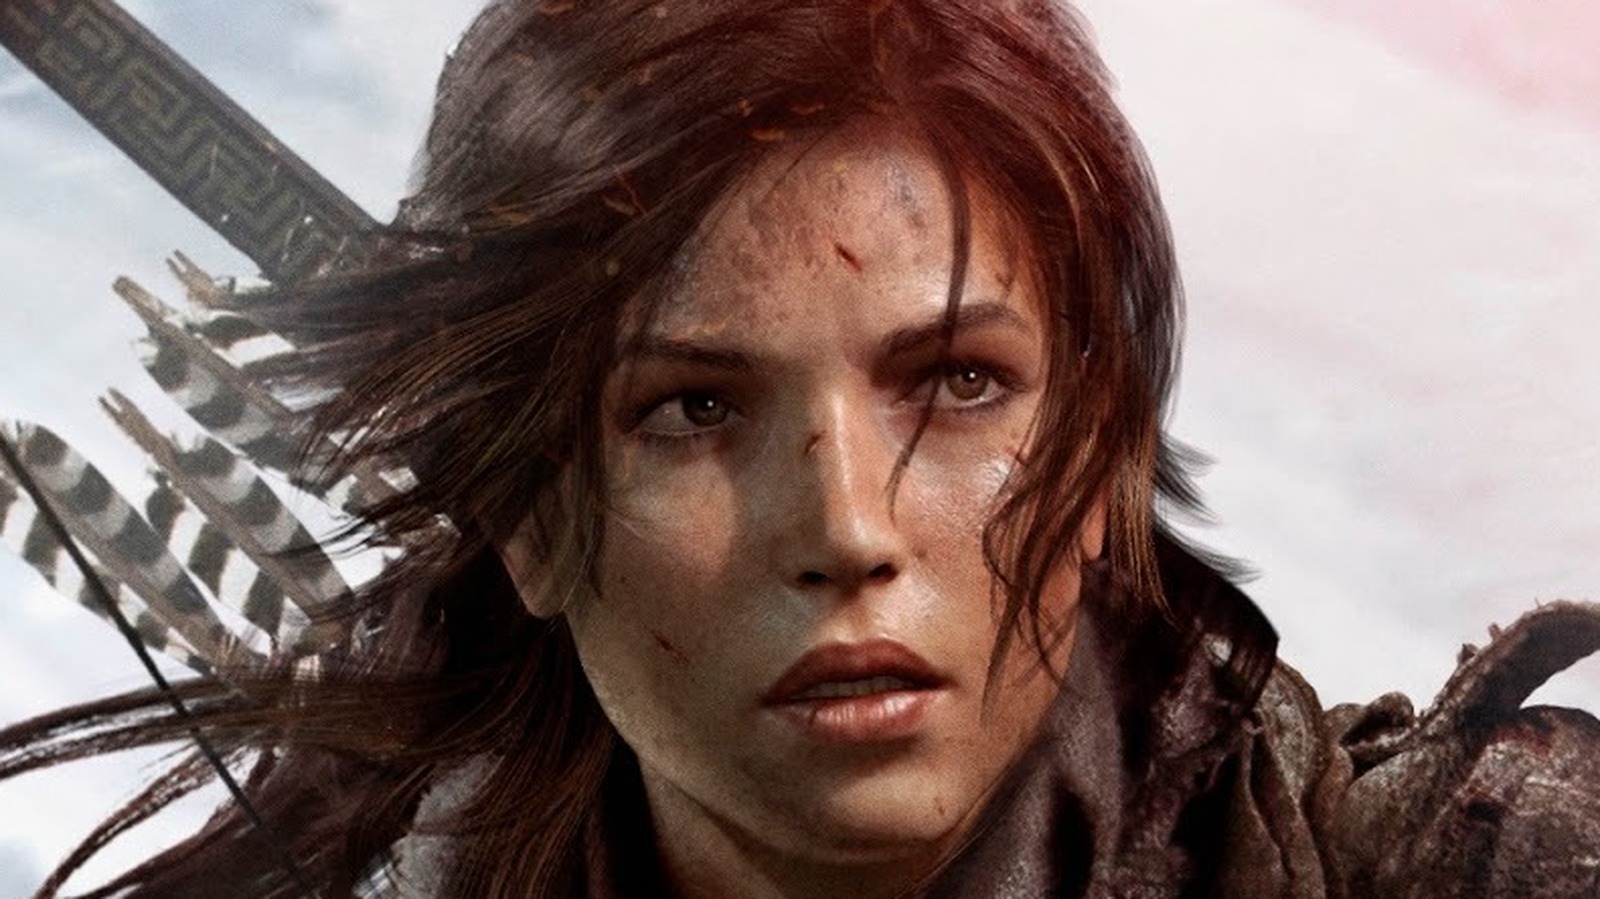 Tomb Raider Anime Series in Development at Netflix